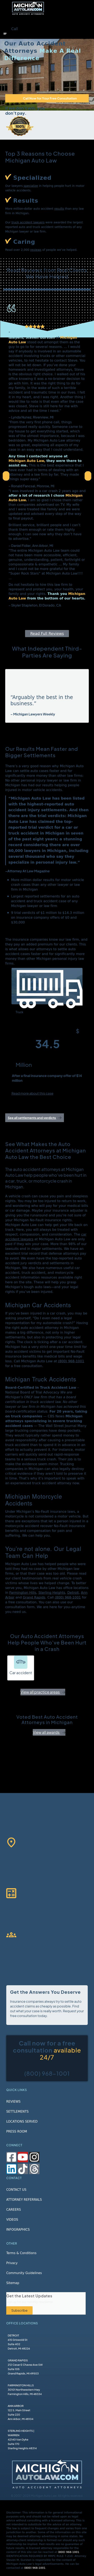 Michigan Auto Law - Farmington Hills MI Lawyers